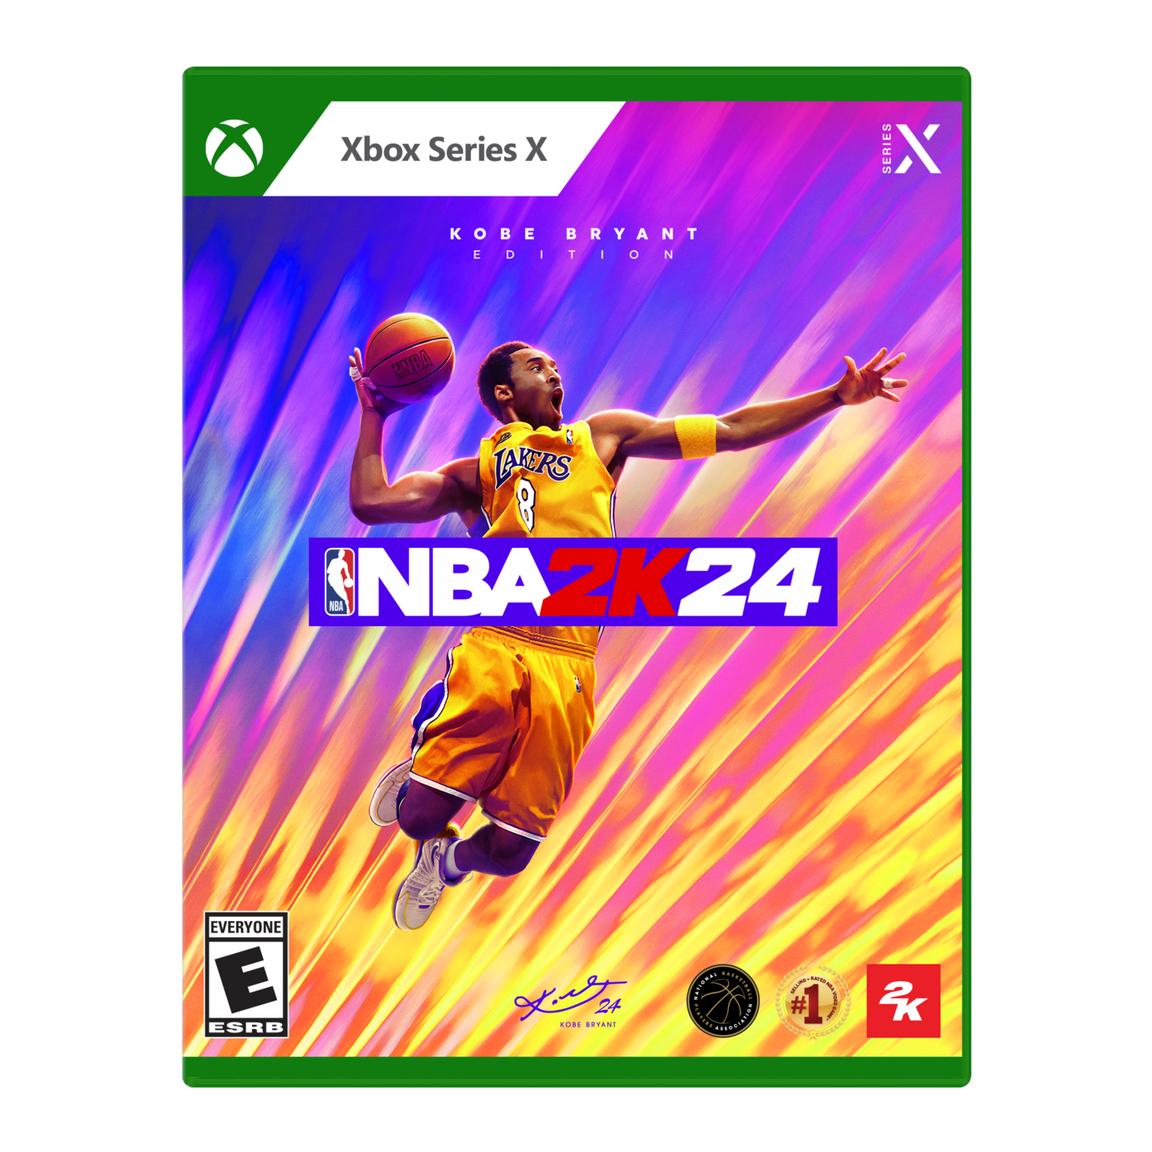 видеоигра nba 2k24 kobe bryant edition xbox series x Видеоигра NBA 2K24 Kobe Bryant Edition - Xbox Series X